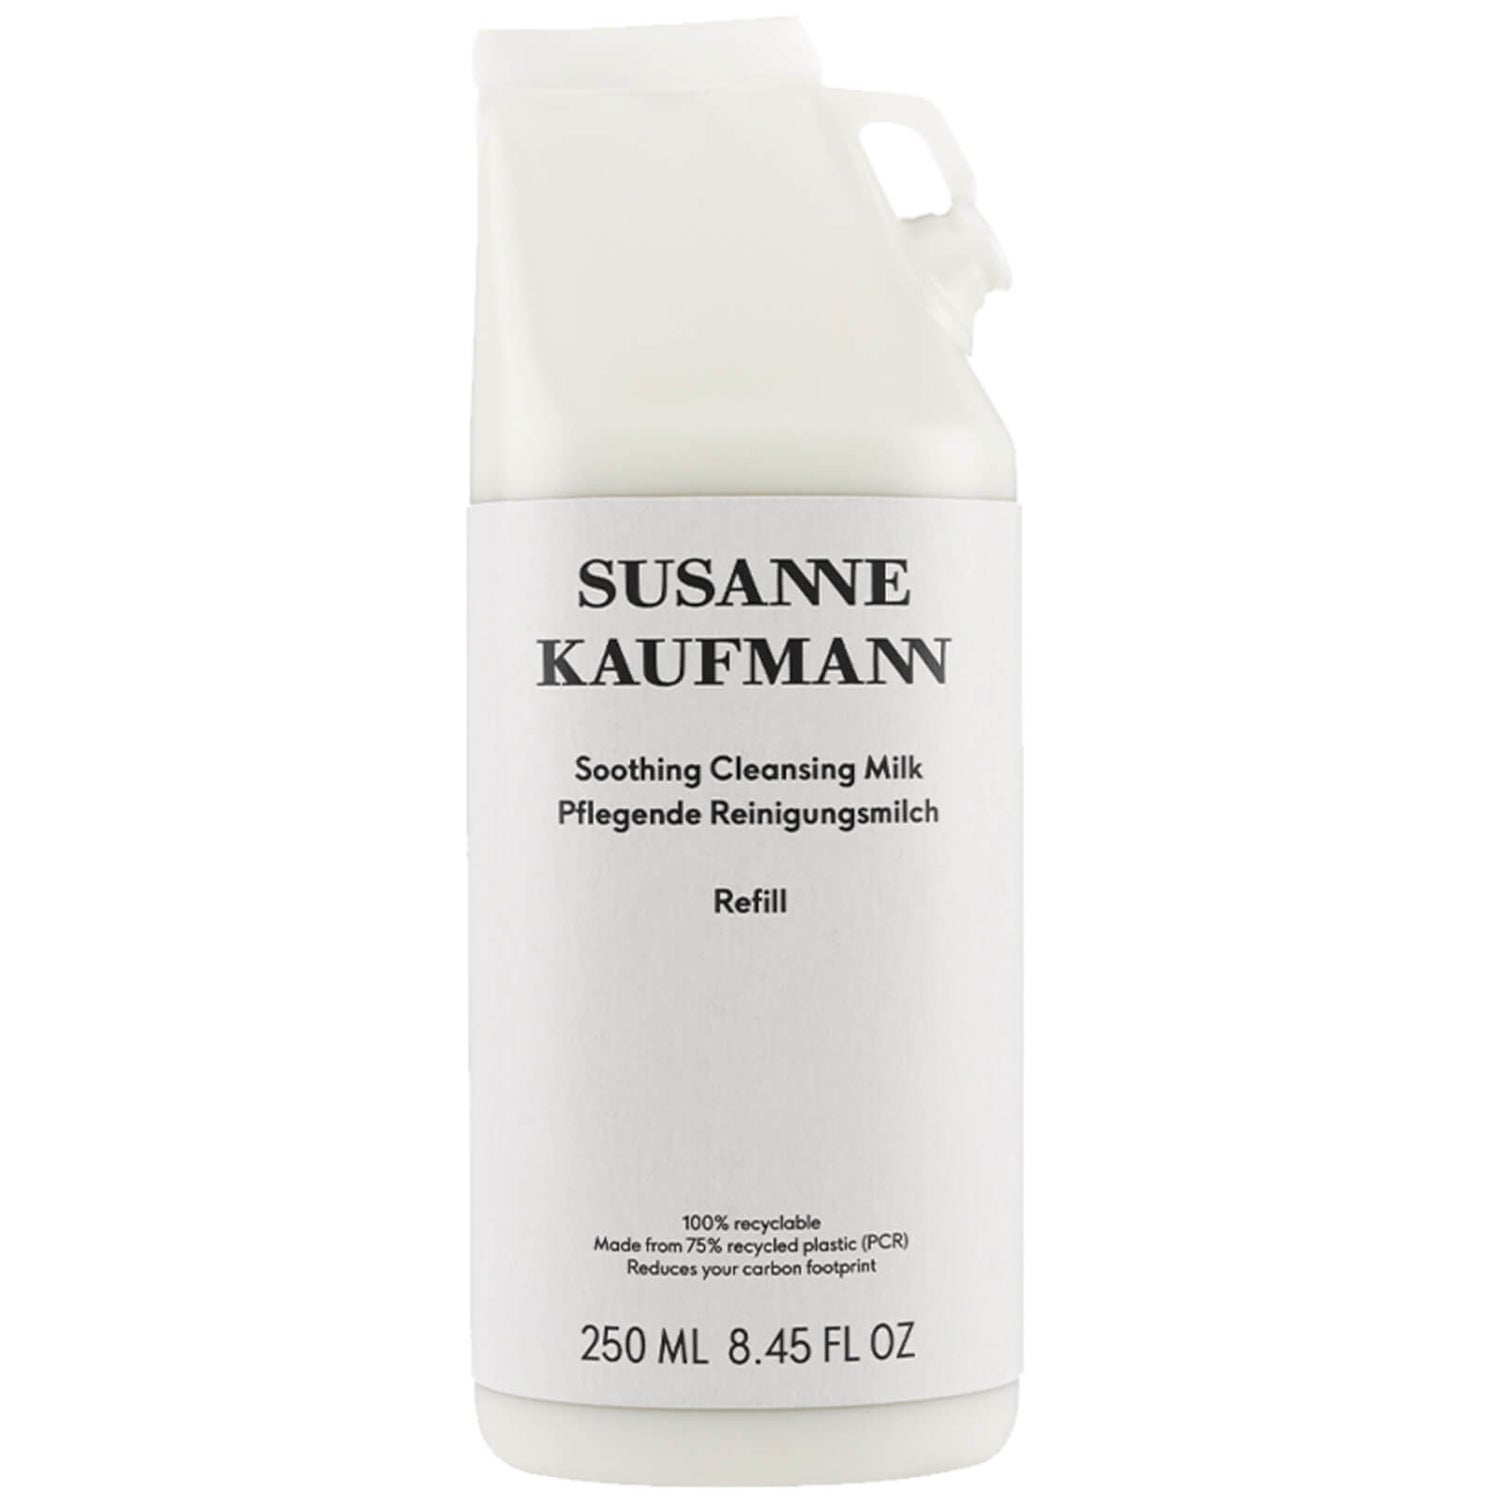 Susanne Kaufmann Soothing Cleansing Milk Refill 250ml